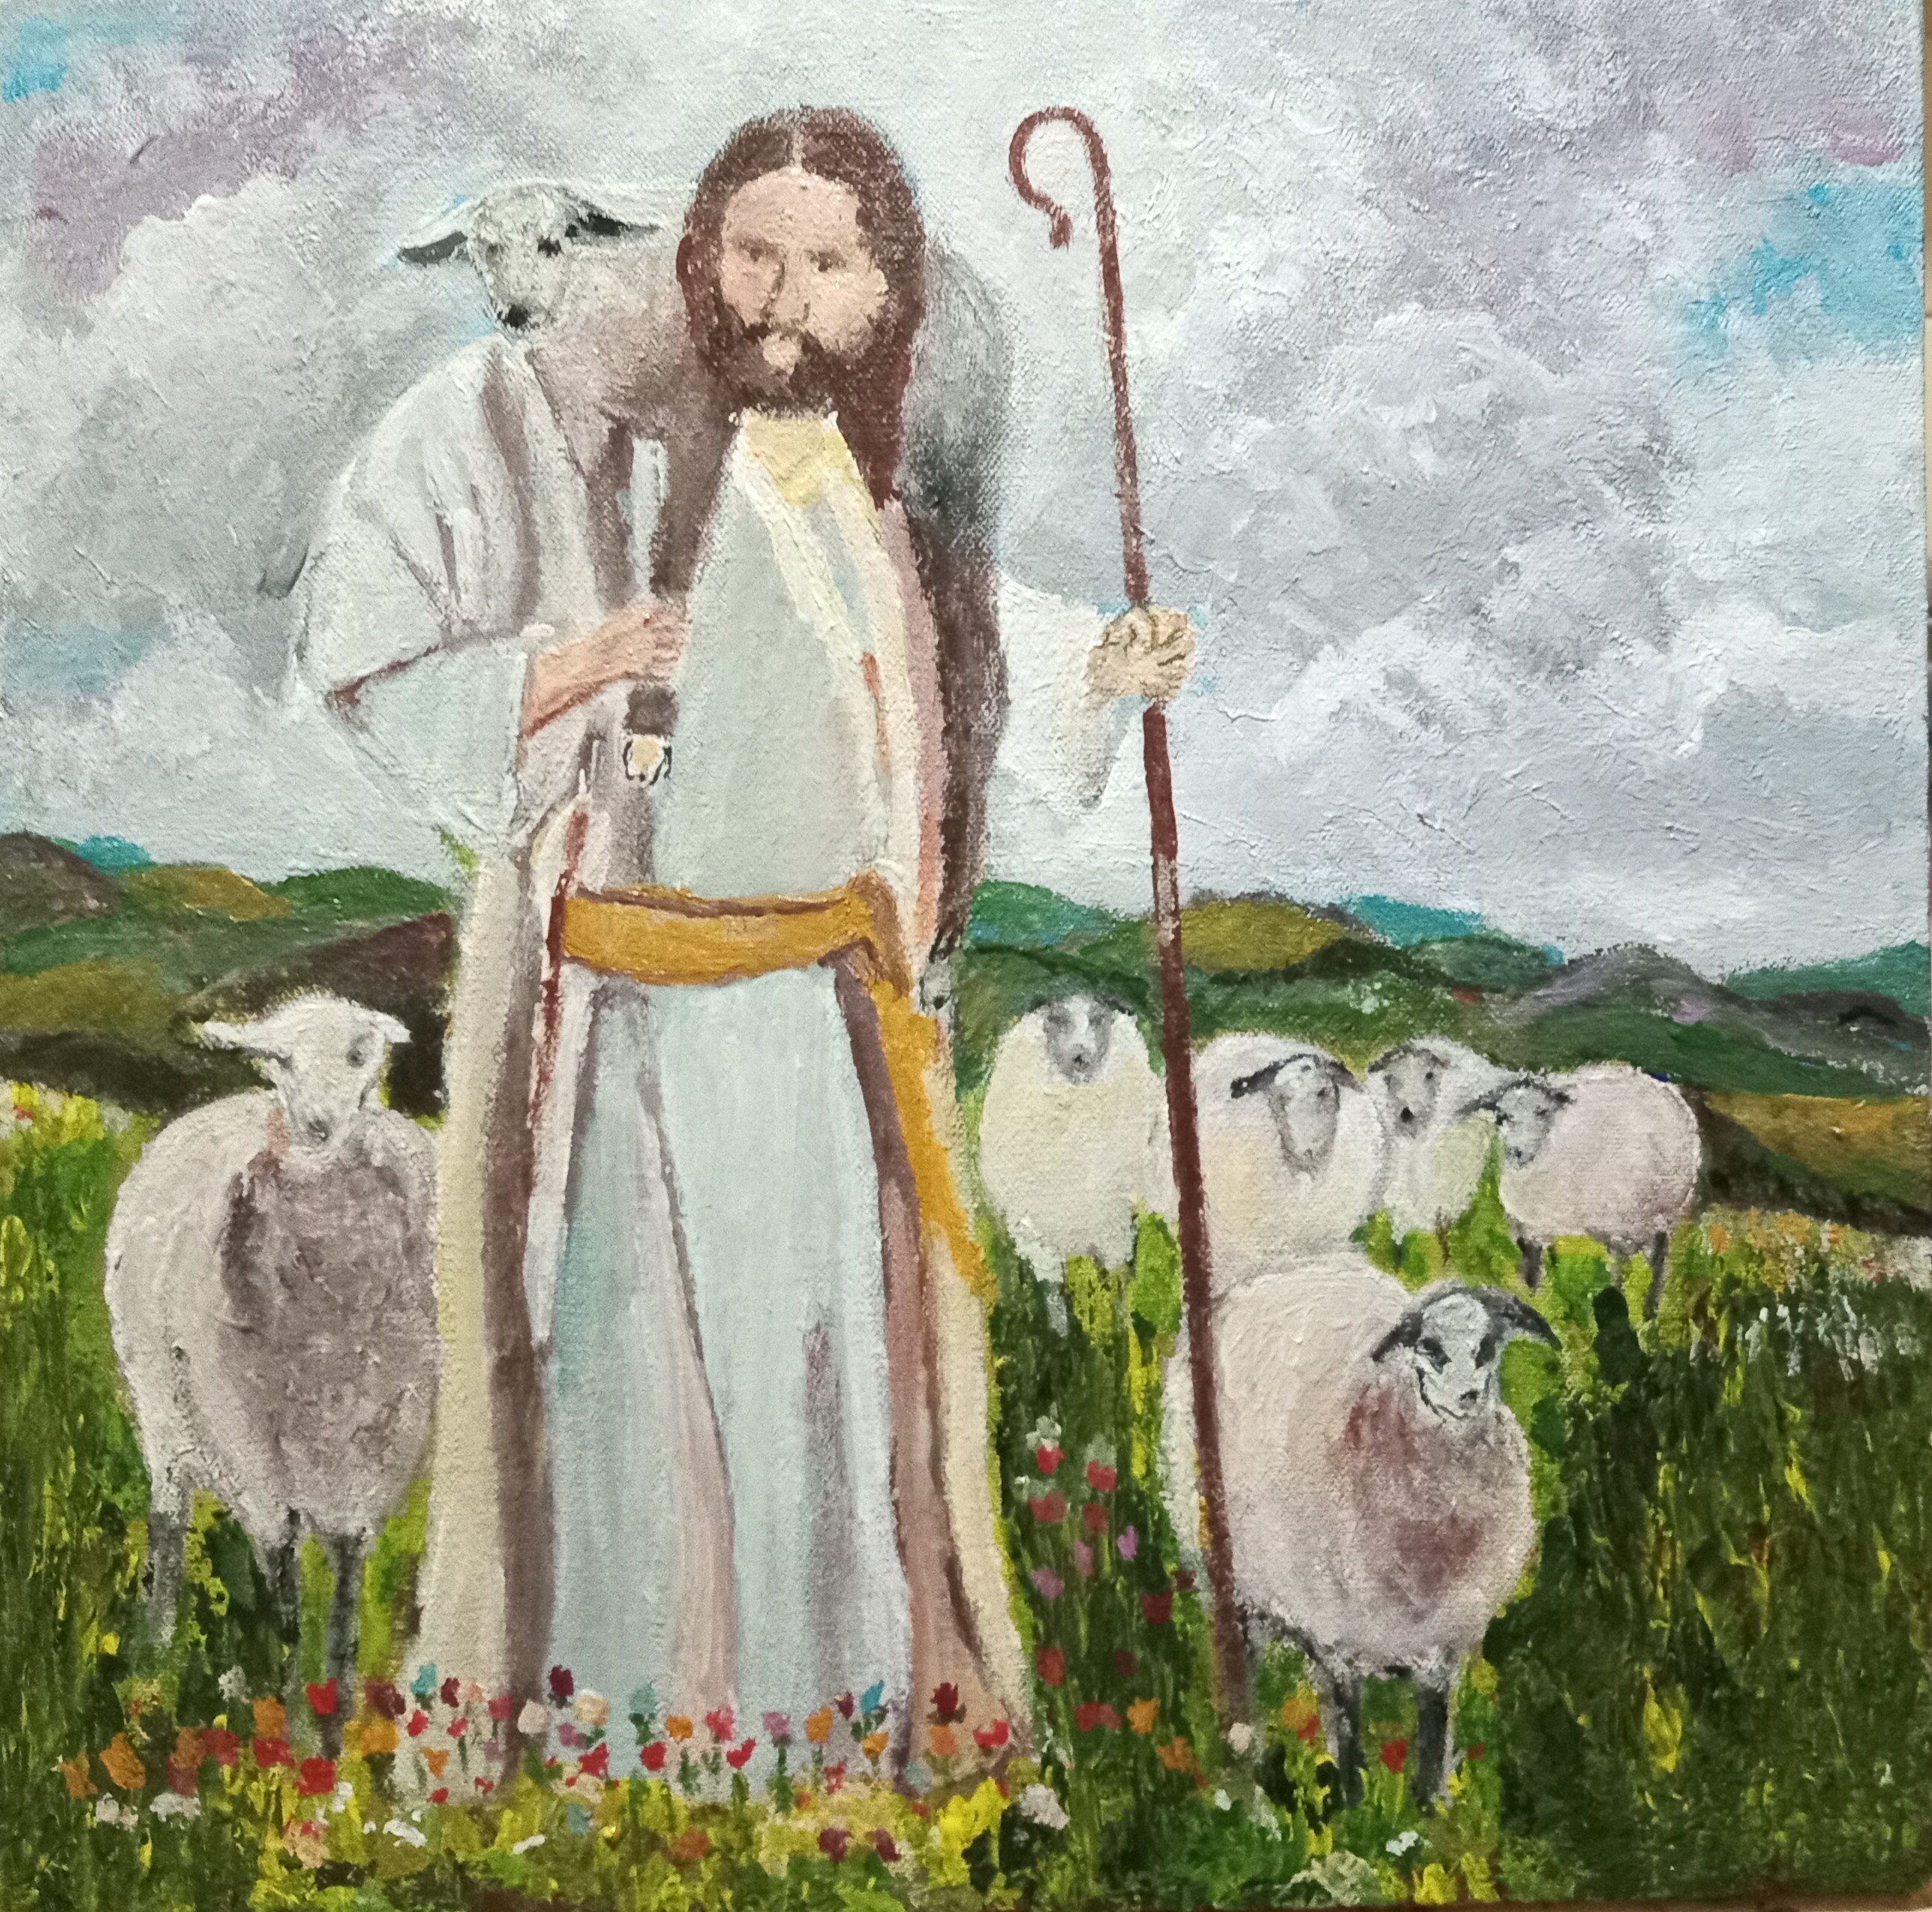 The Good Shepherd by Simpson David